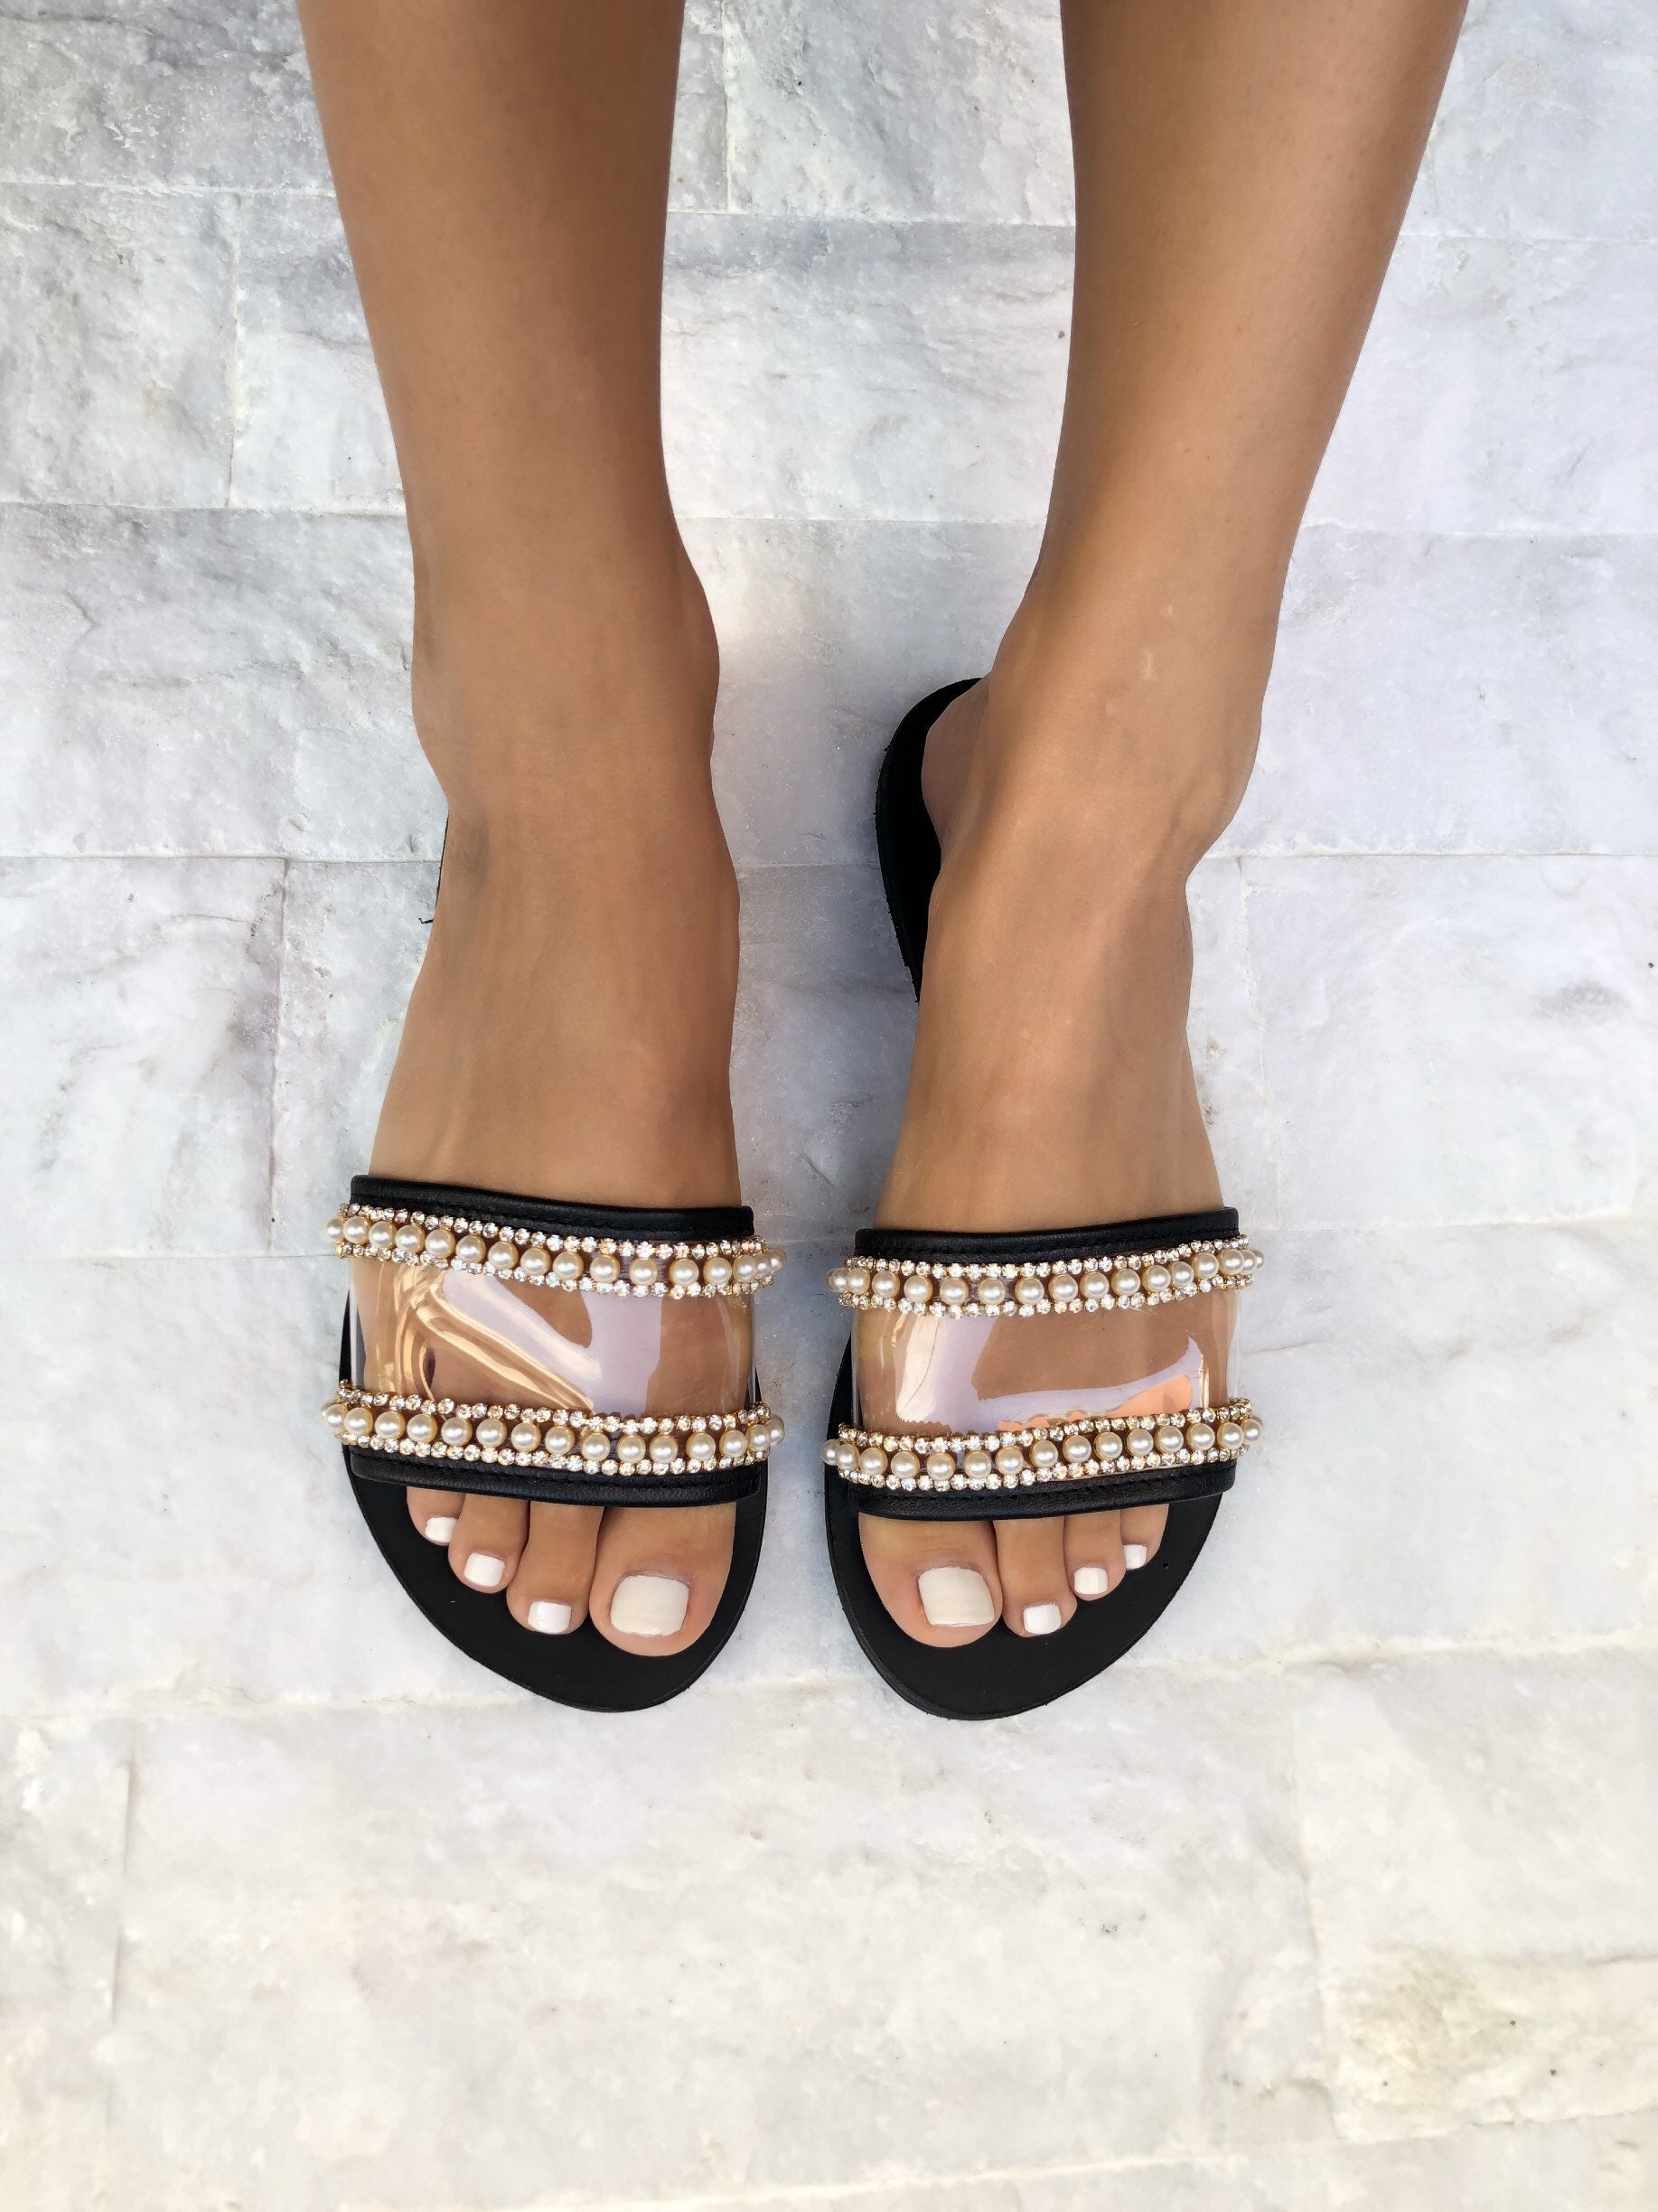 Black Leather Sandals Women Summer Sandals Greek Sandals | Etsy